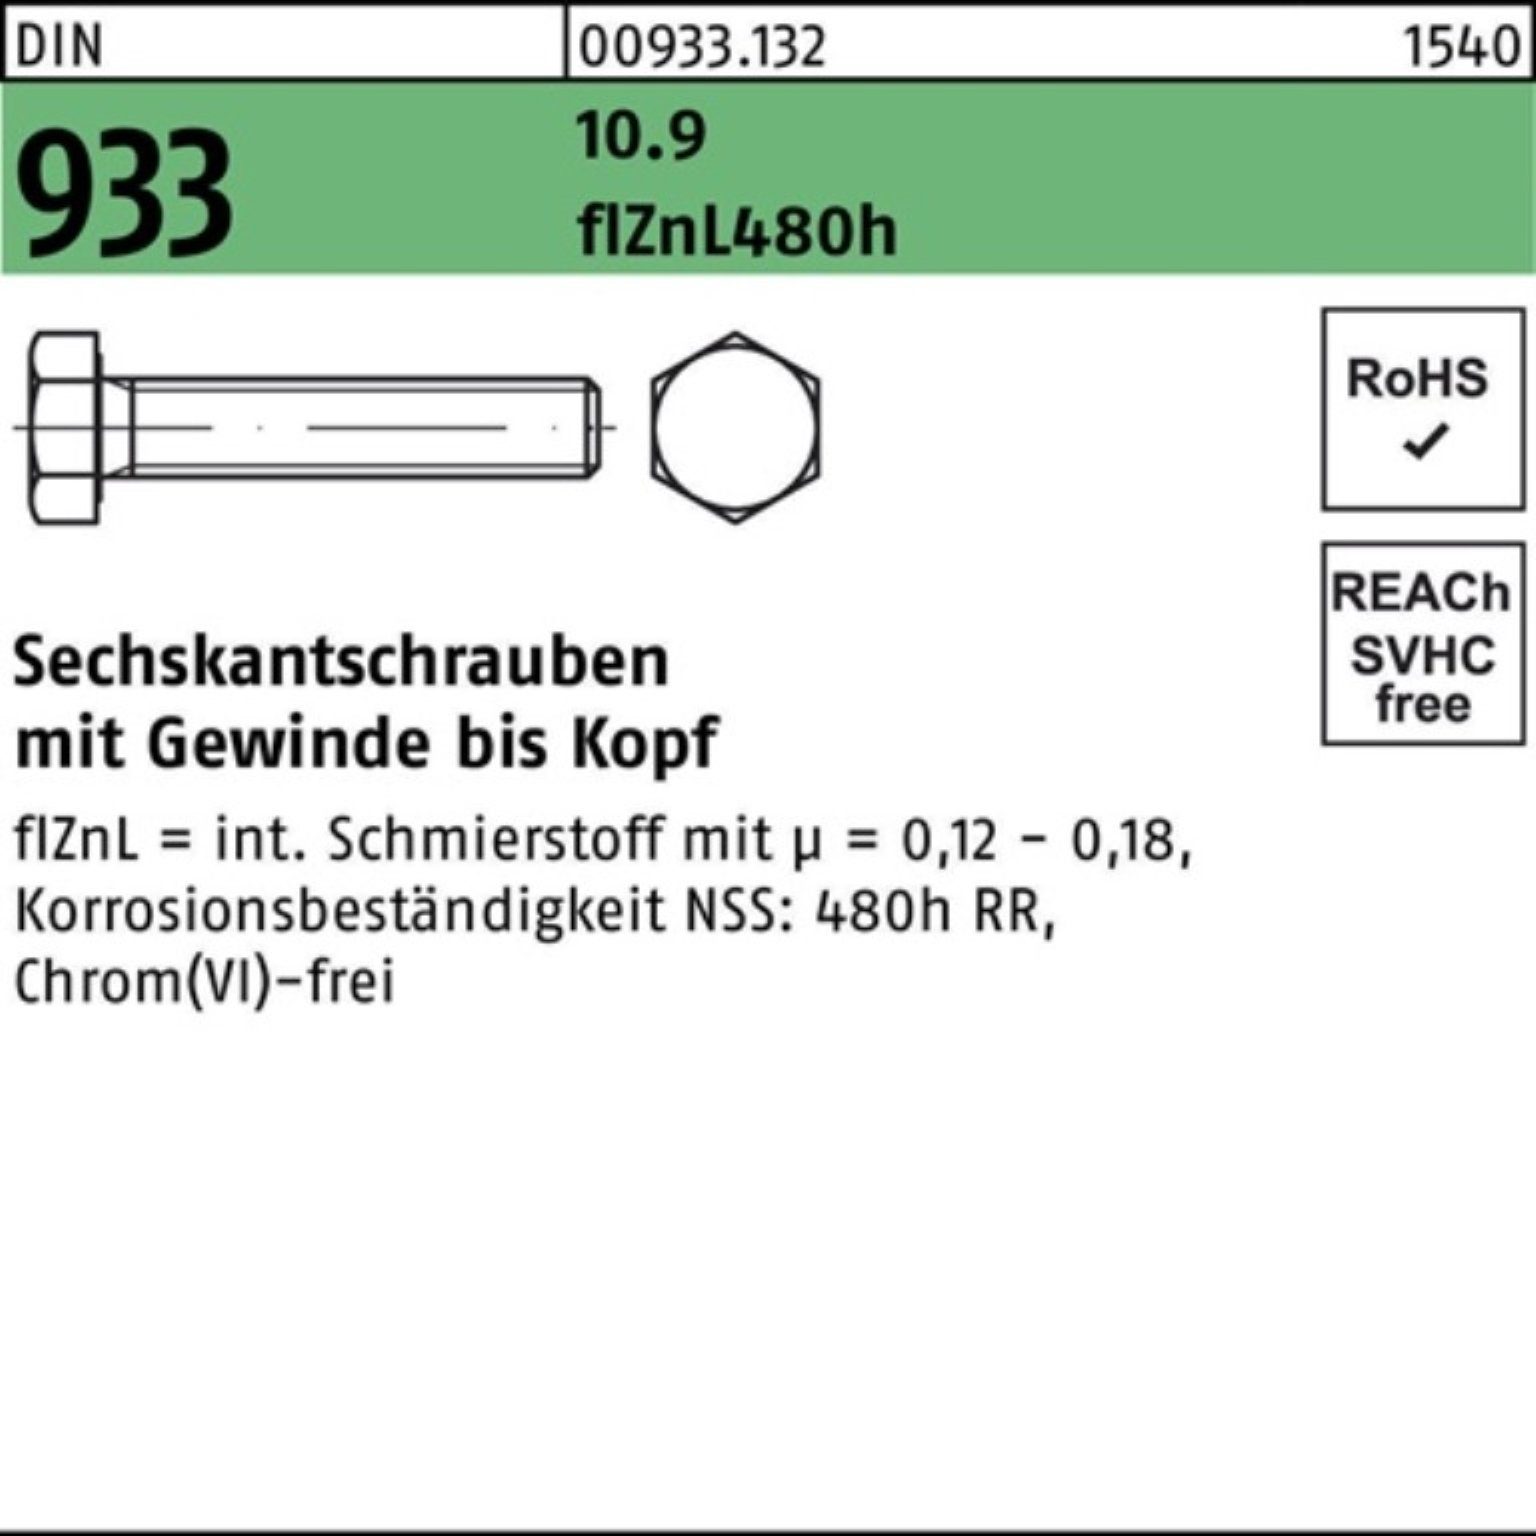 Pack 10.9 Reyher DIN Sechskantschraube 933 flZnL/nc/x/x/480h M24x 55 VG Sechskantschraube 100er